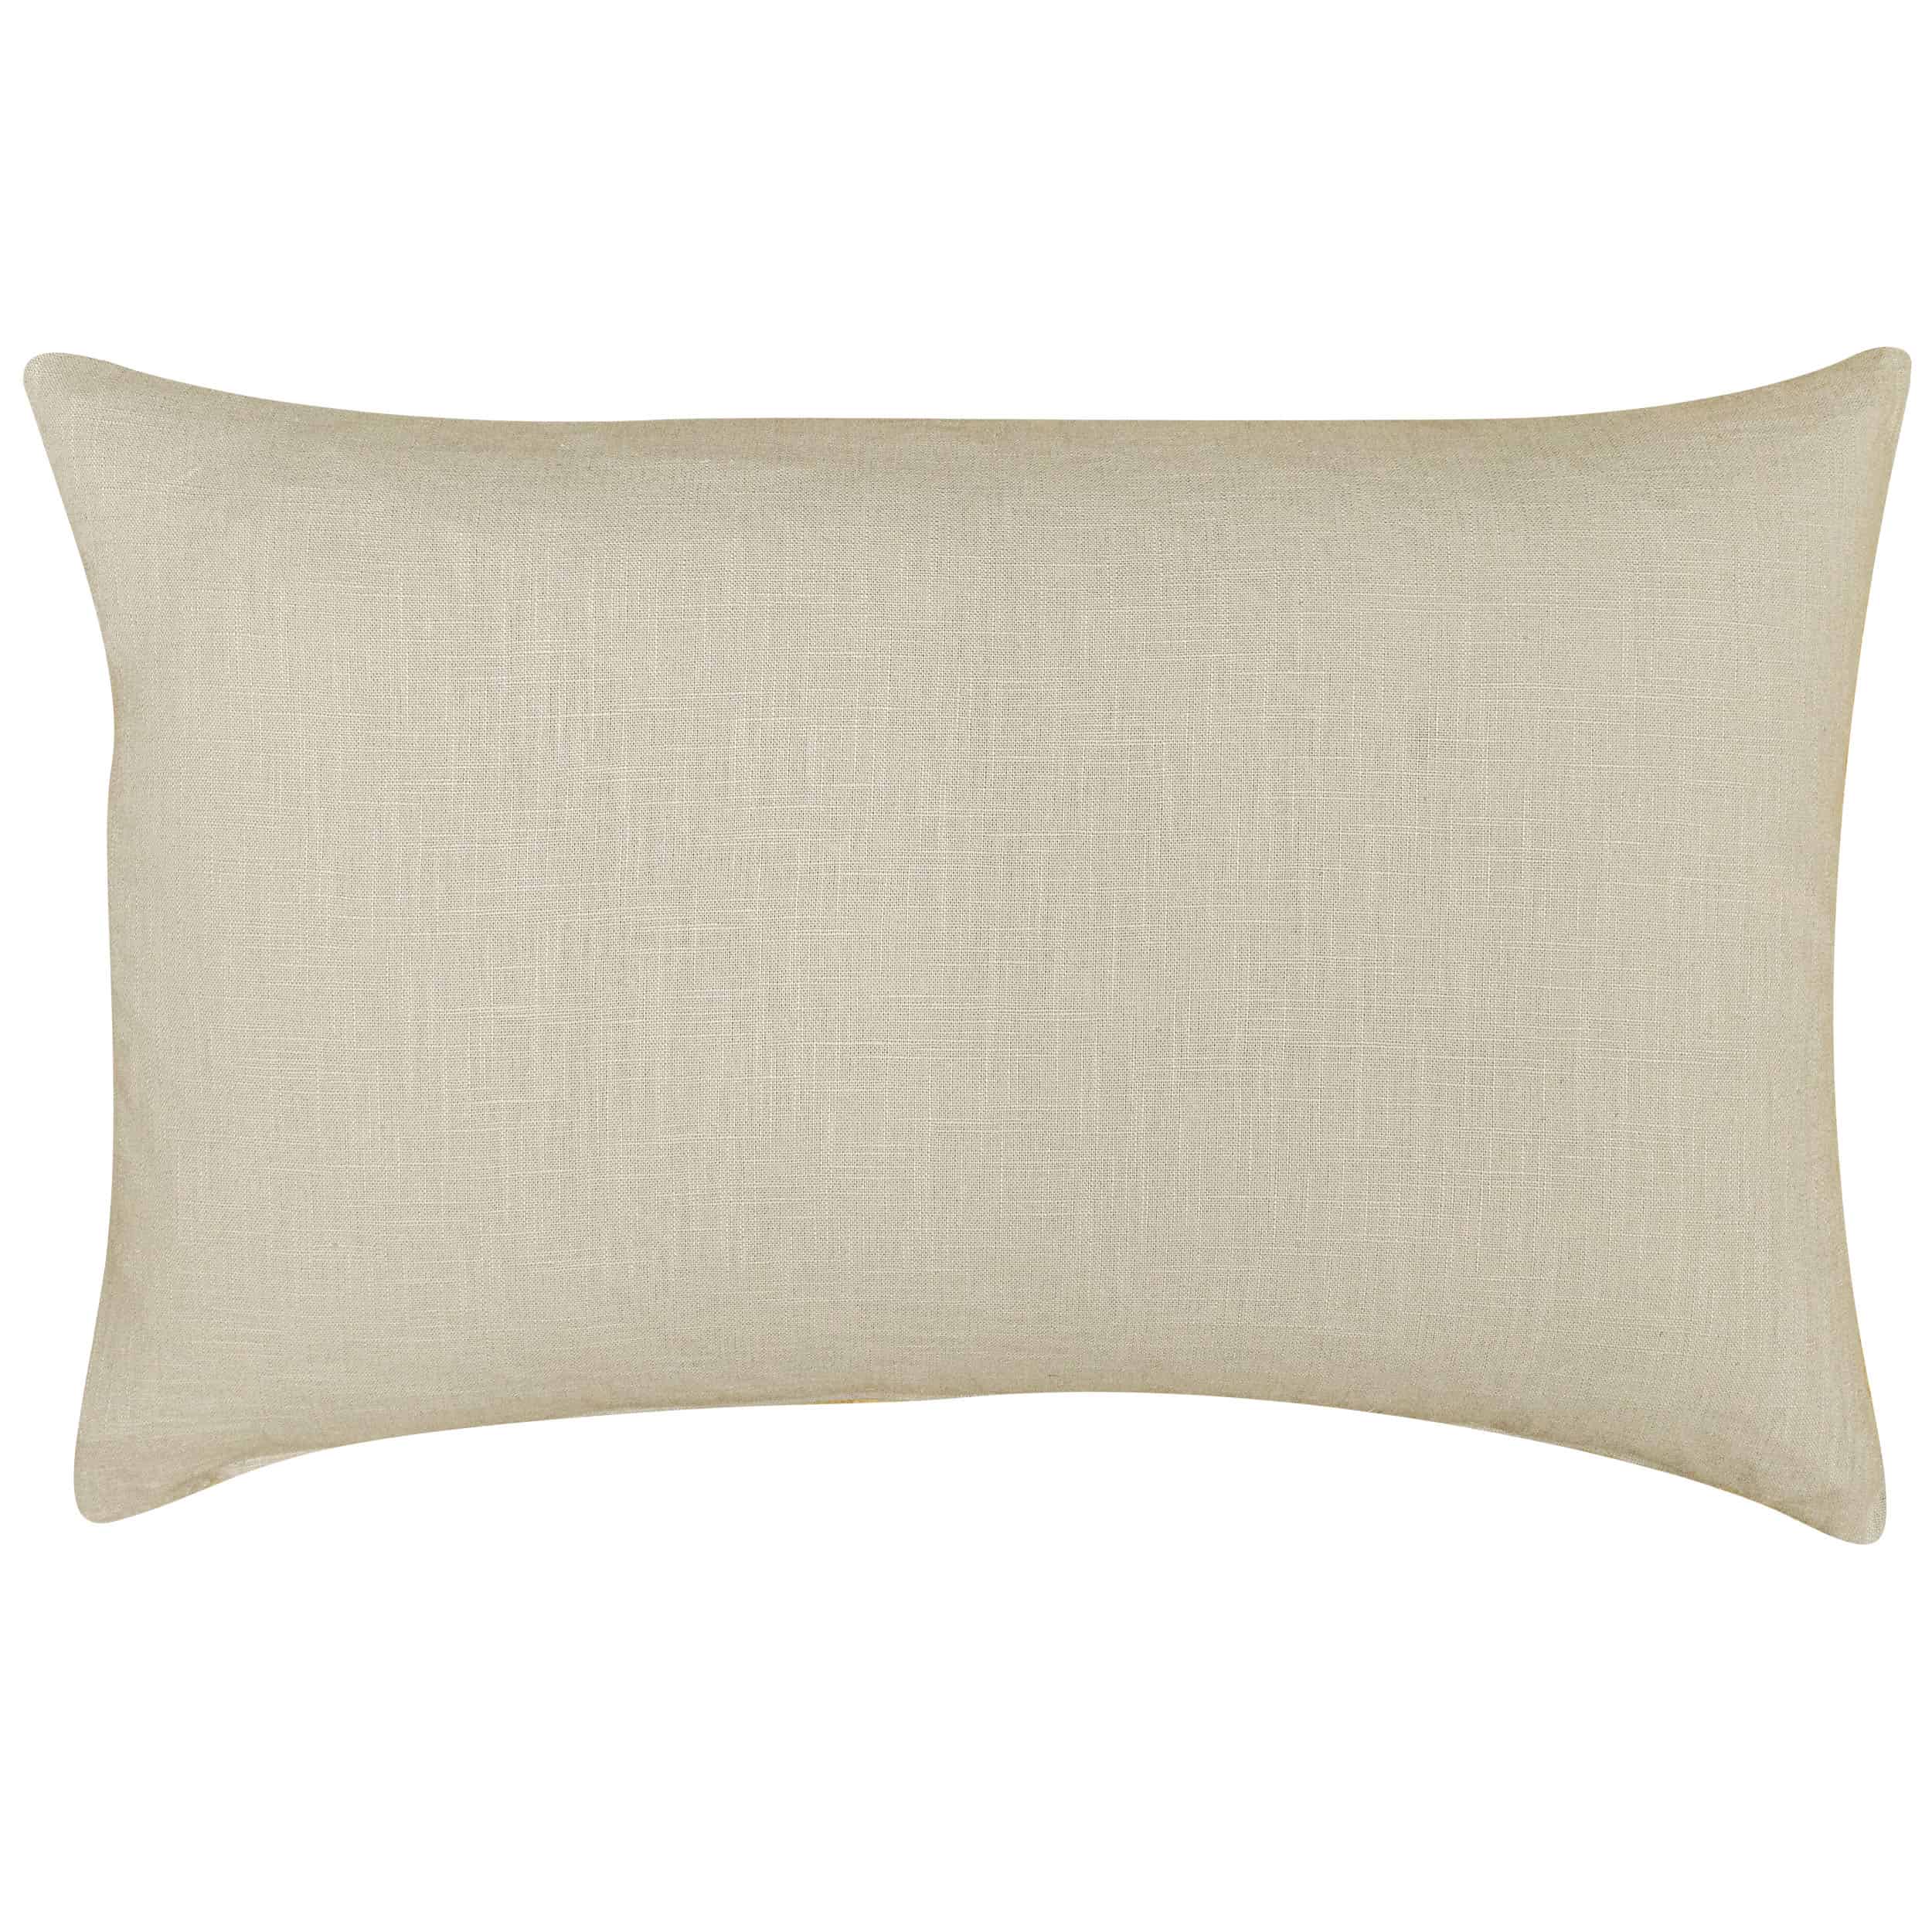 100% Linen Boudoir Cushion Cover in Natural